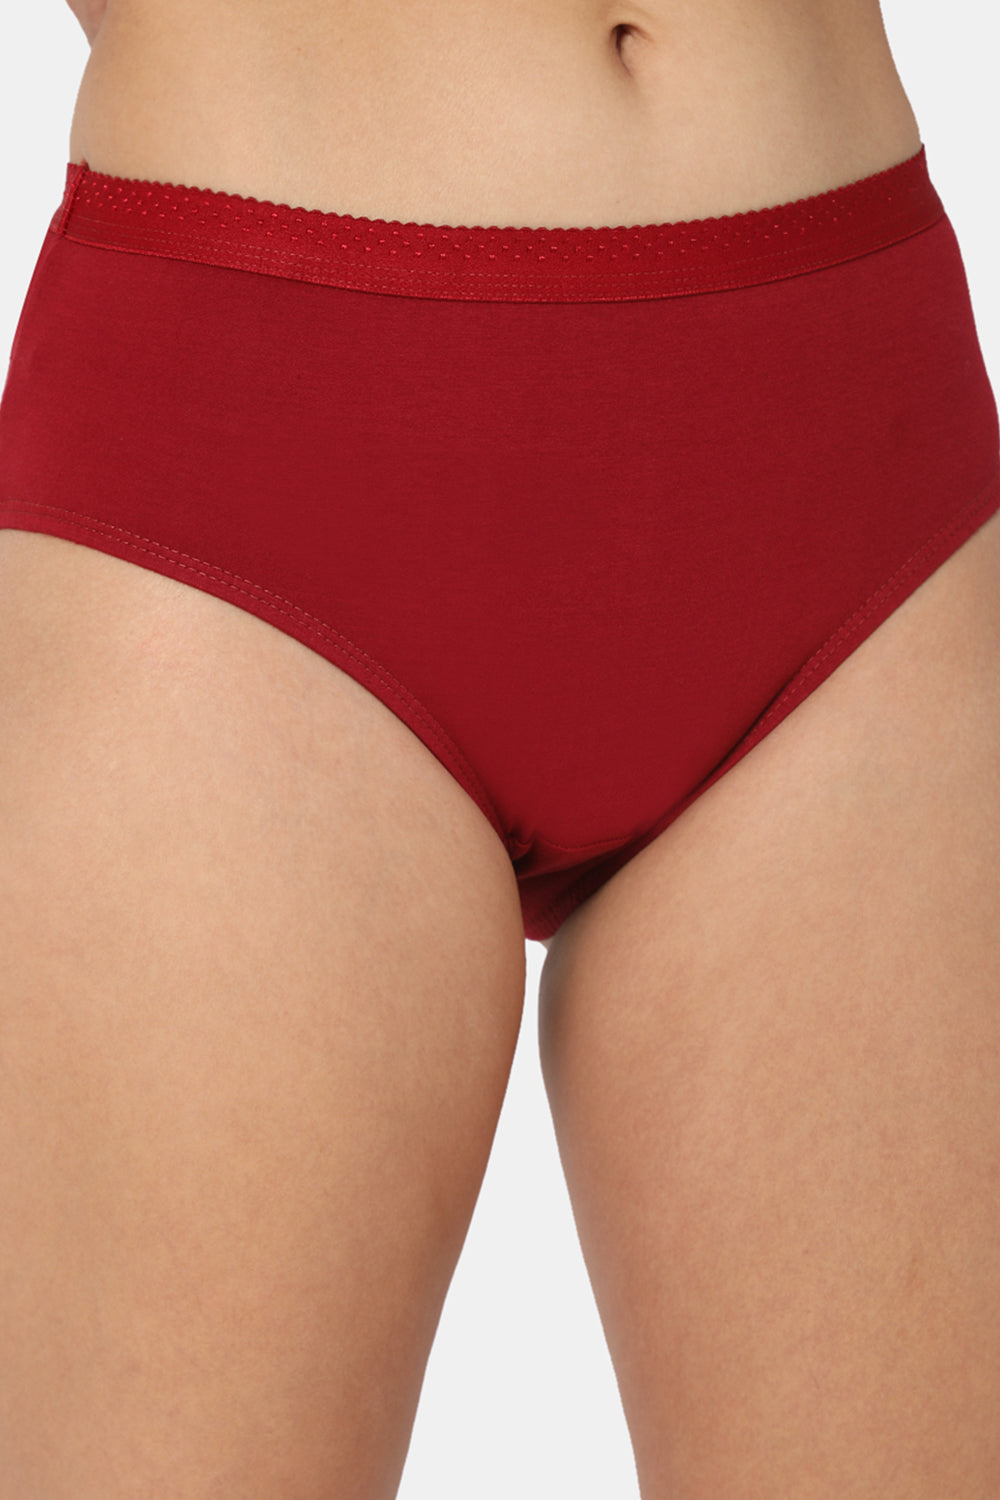 Briefs Plain Panty Set for Women,Silk Panties Underar Pack of 3